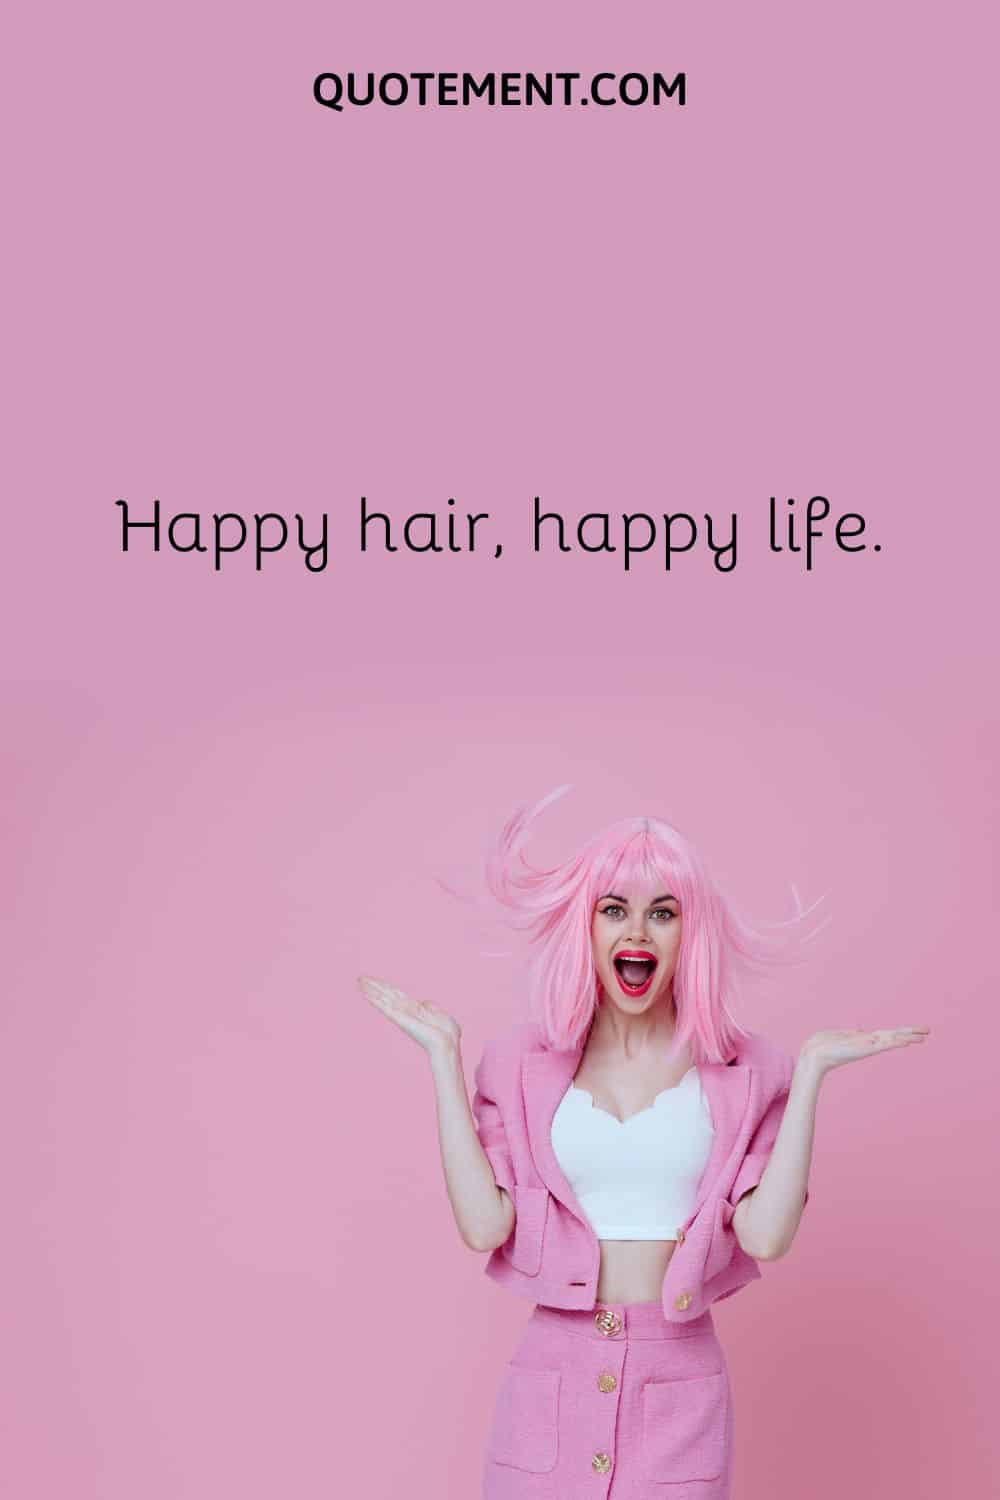 Happy hair, happy life.
